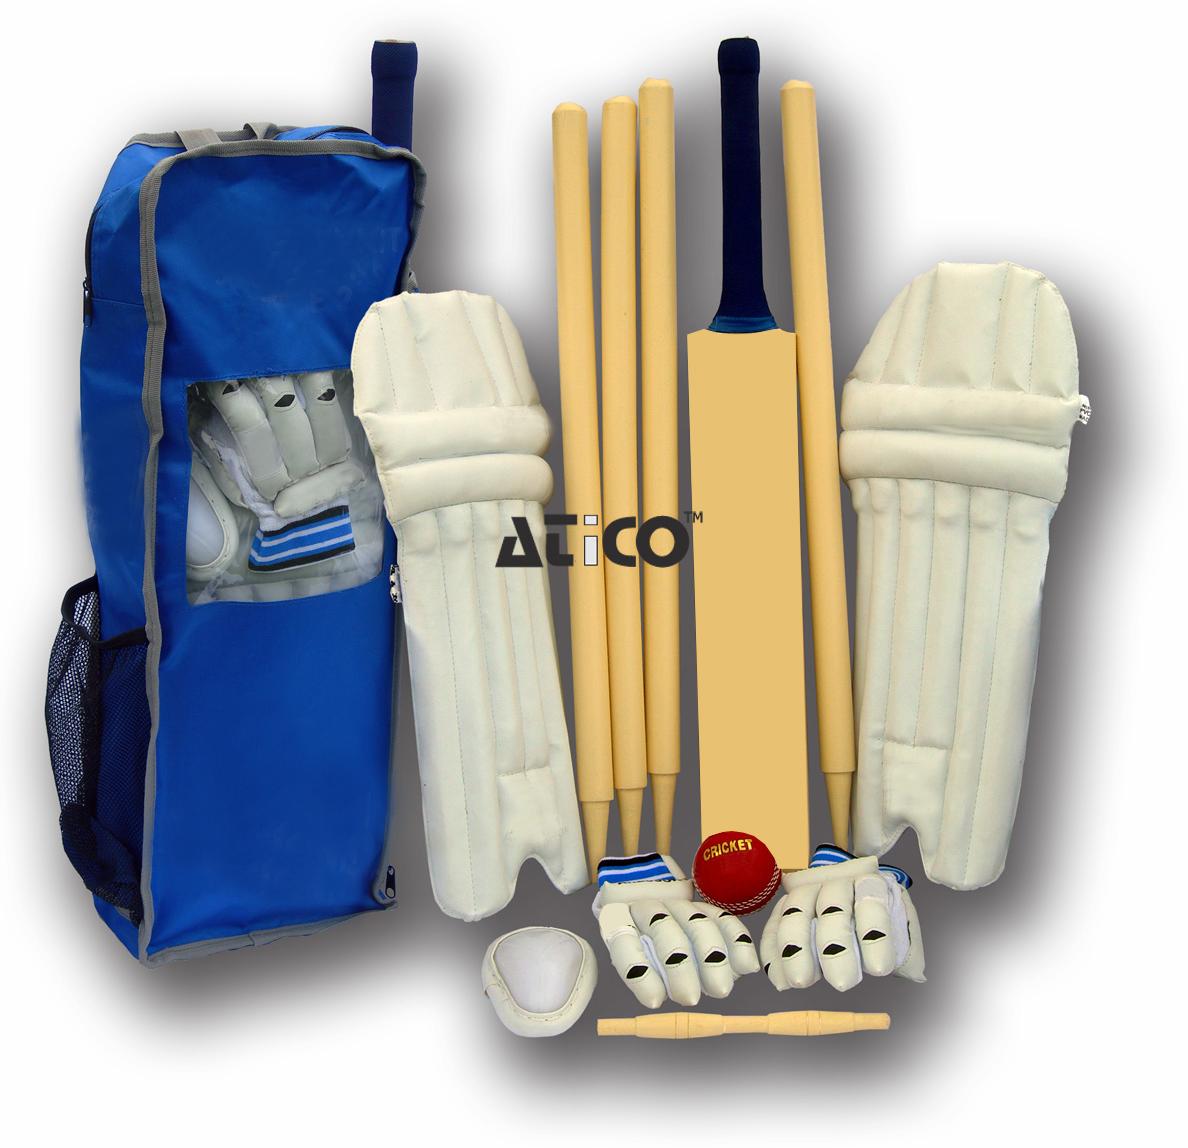 Cricket Sets